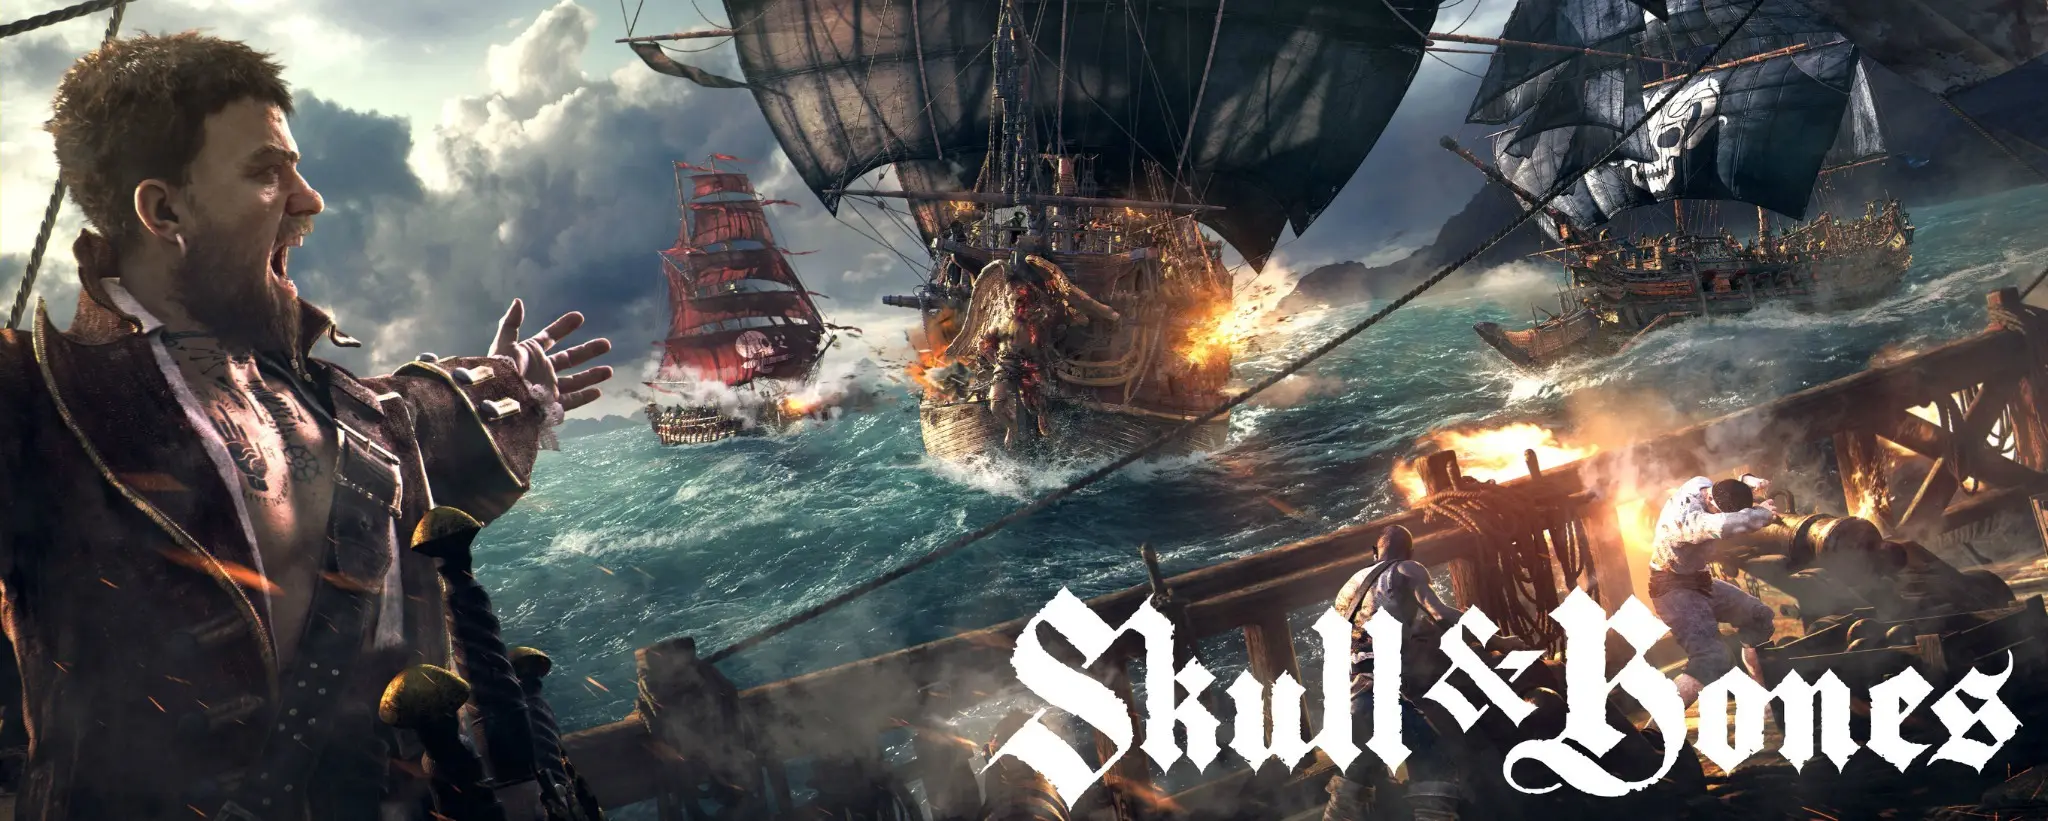 Ubisoft's latest blockbuster, Skull And Bones, is just around the corner